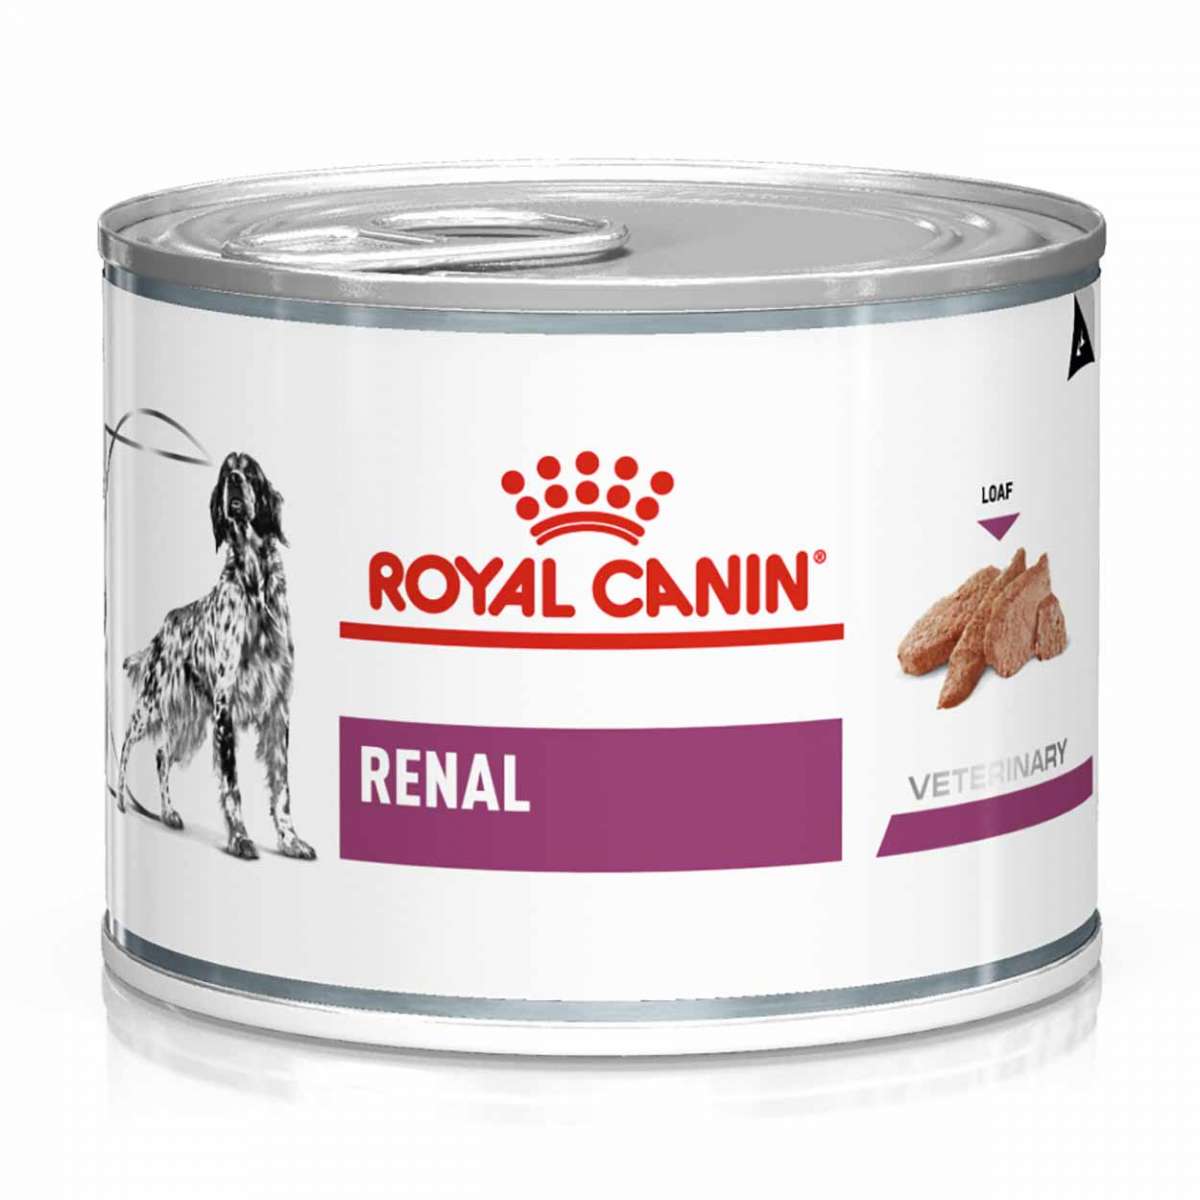 Royal Canin Hund Renal Royal Canin Hunde fuetternundfit.de